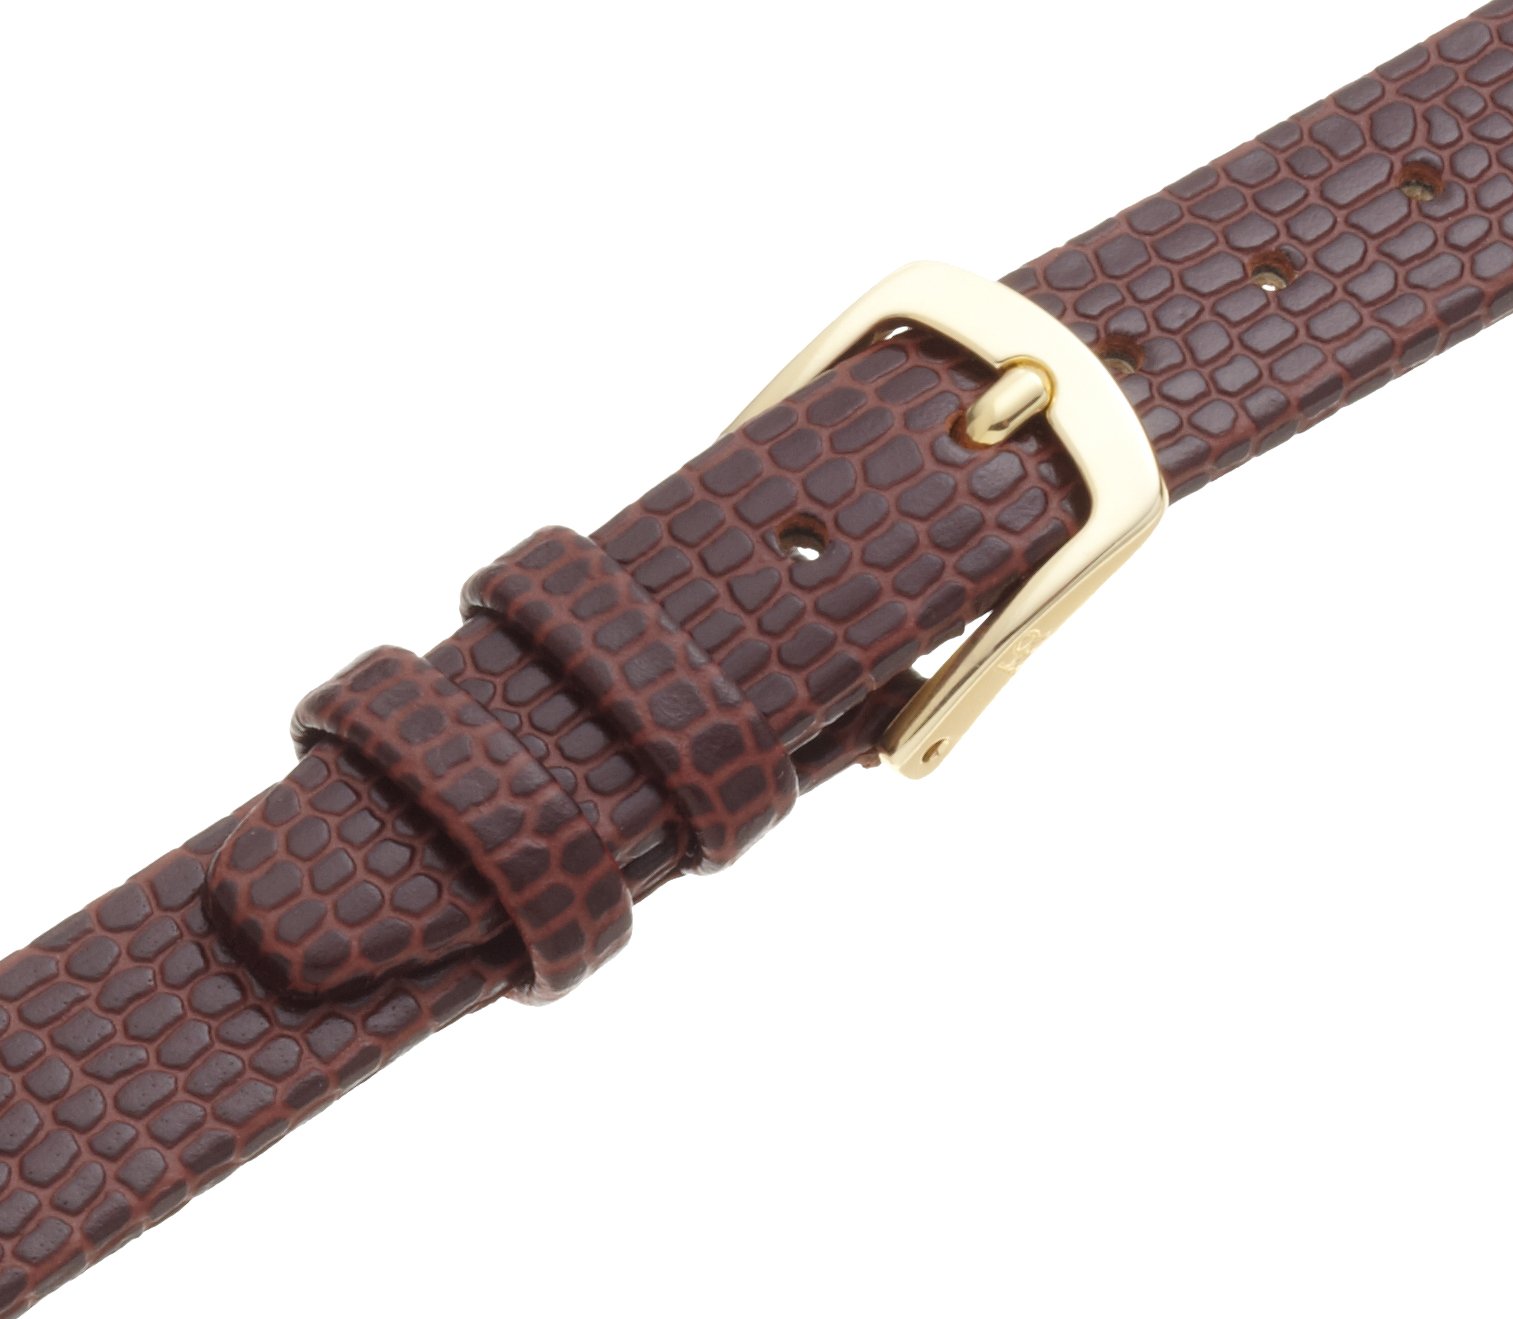 Hadley-Roma Women's LSL706LA 100 Genuine Leather Strap Watchband